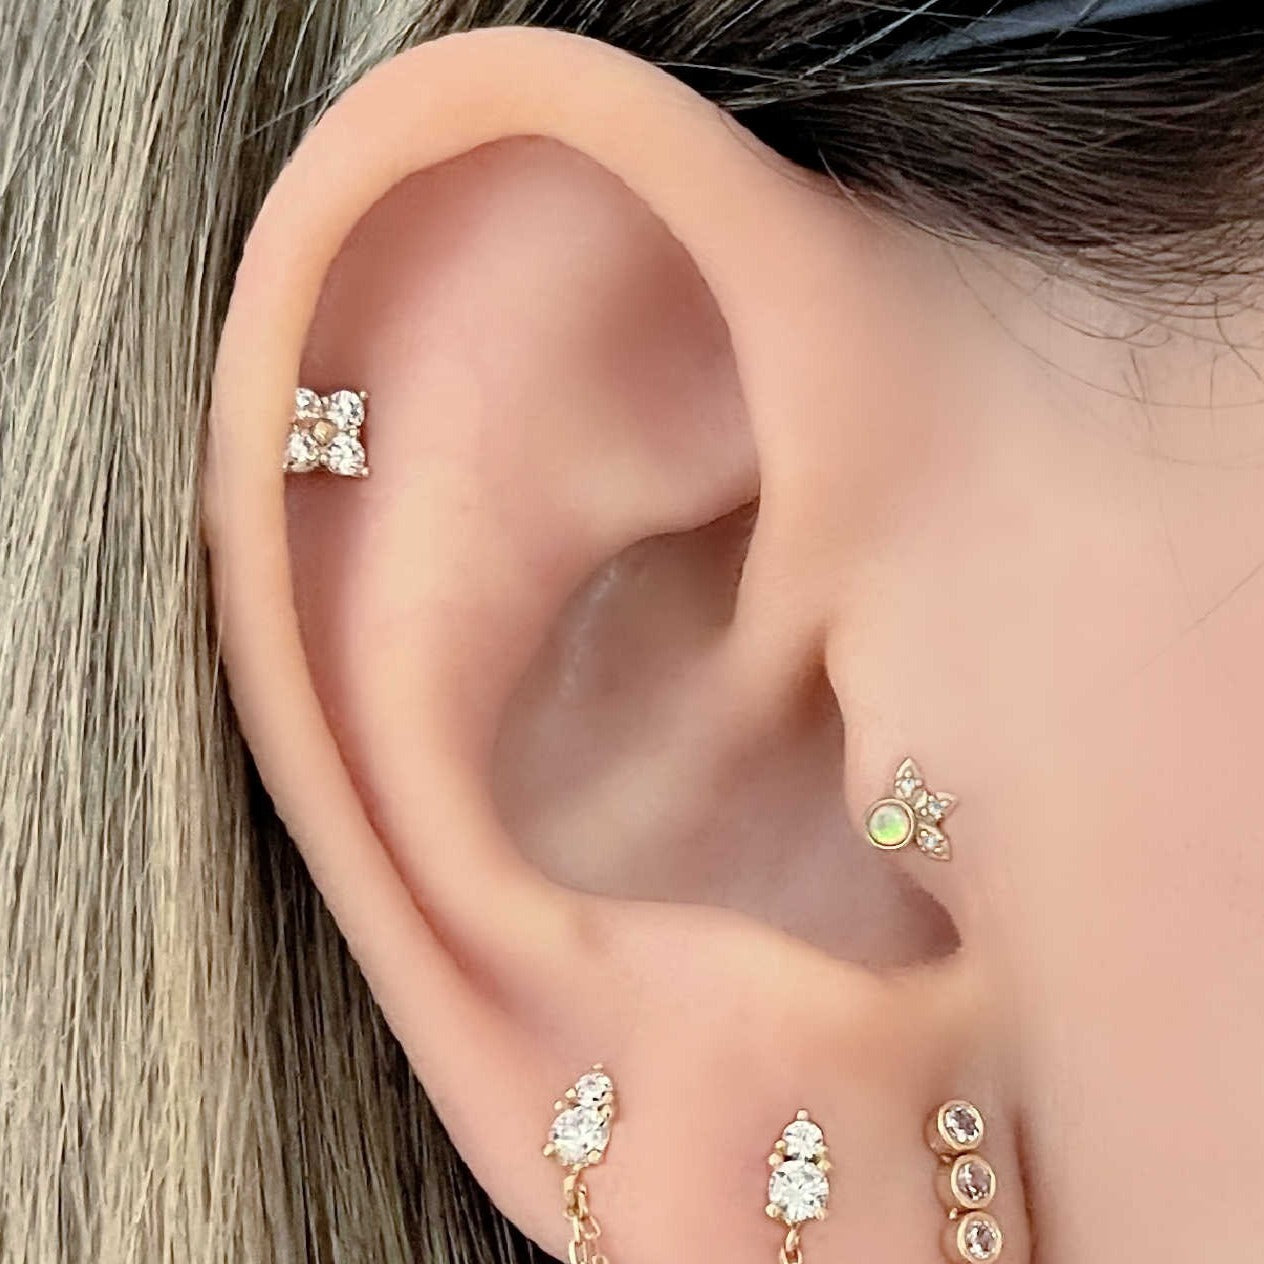 Classy Ear Piercing Ideas for Women at MyBodiArt.com - Upper Ear Cartilage  Earring - Conch Ring - Fake Piercing Ear … | Ear cuff earings, Ear cuff,  Crystal ear cuff